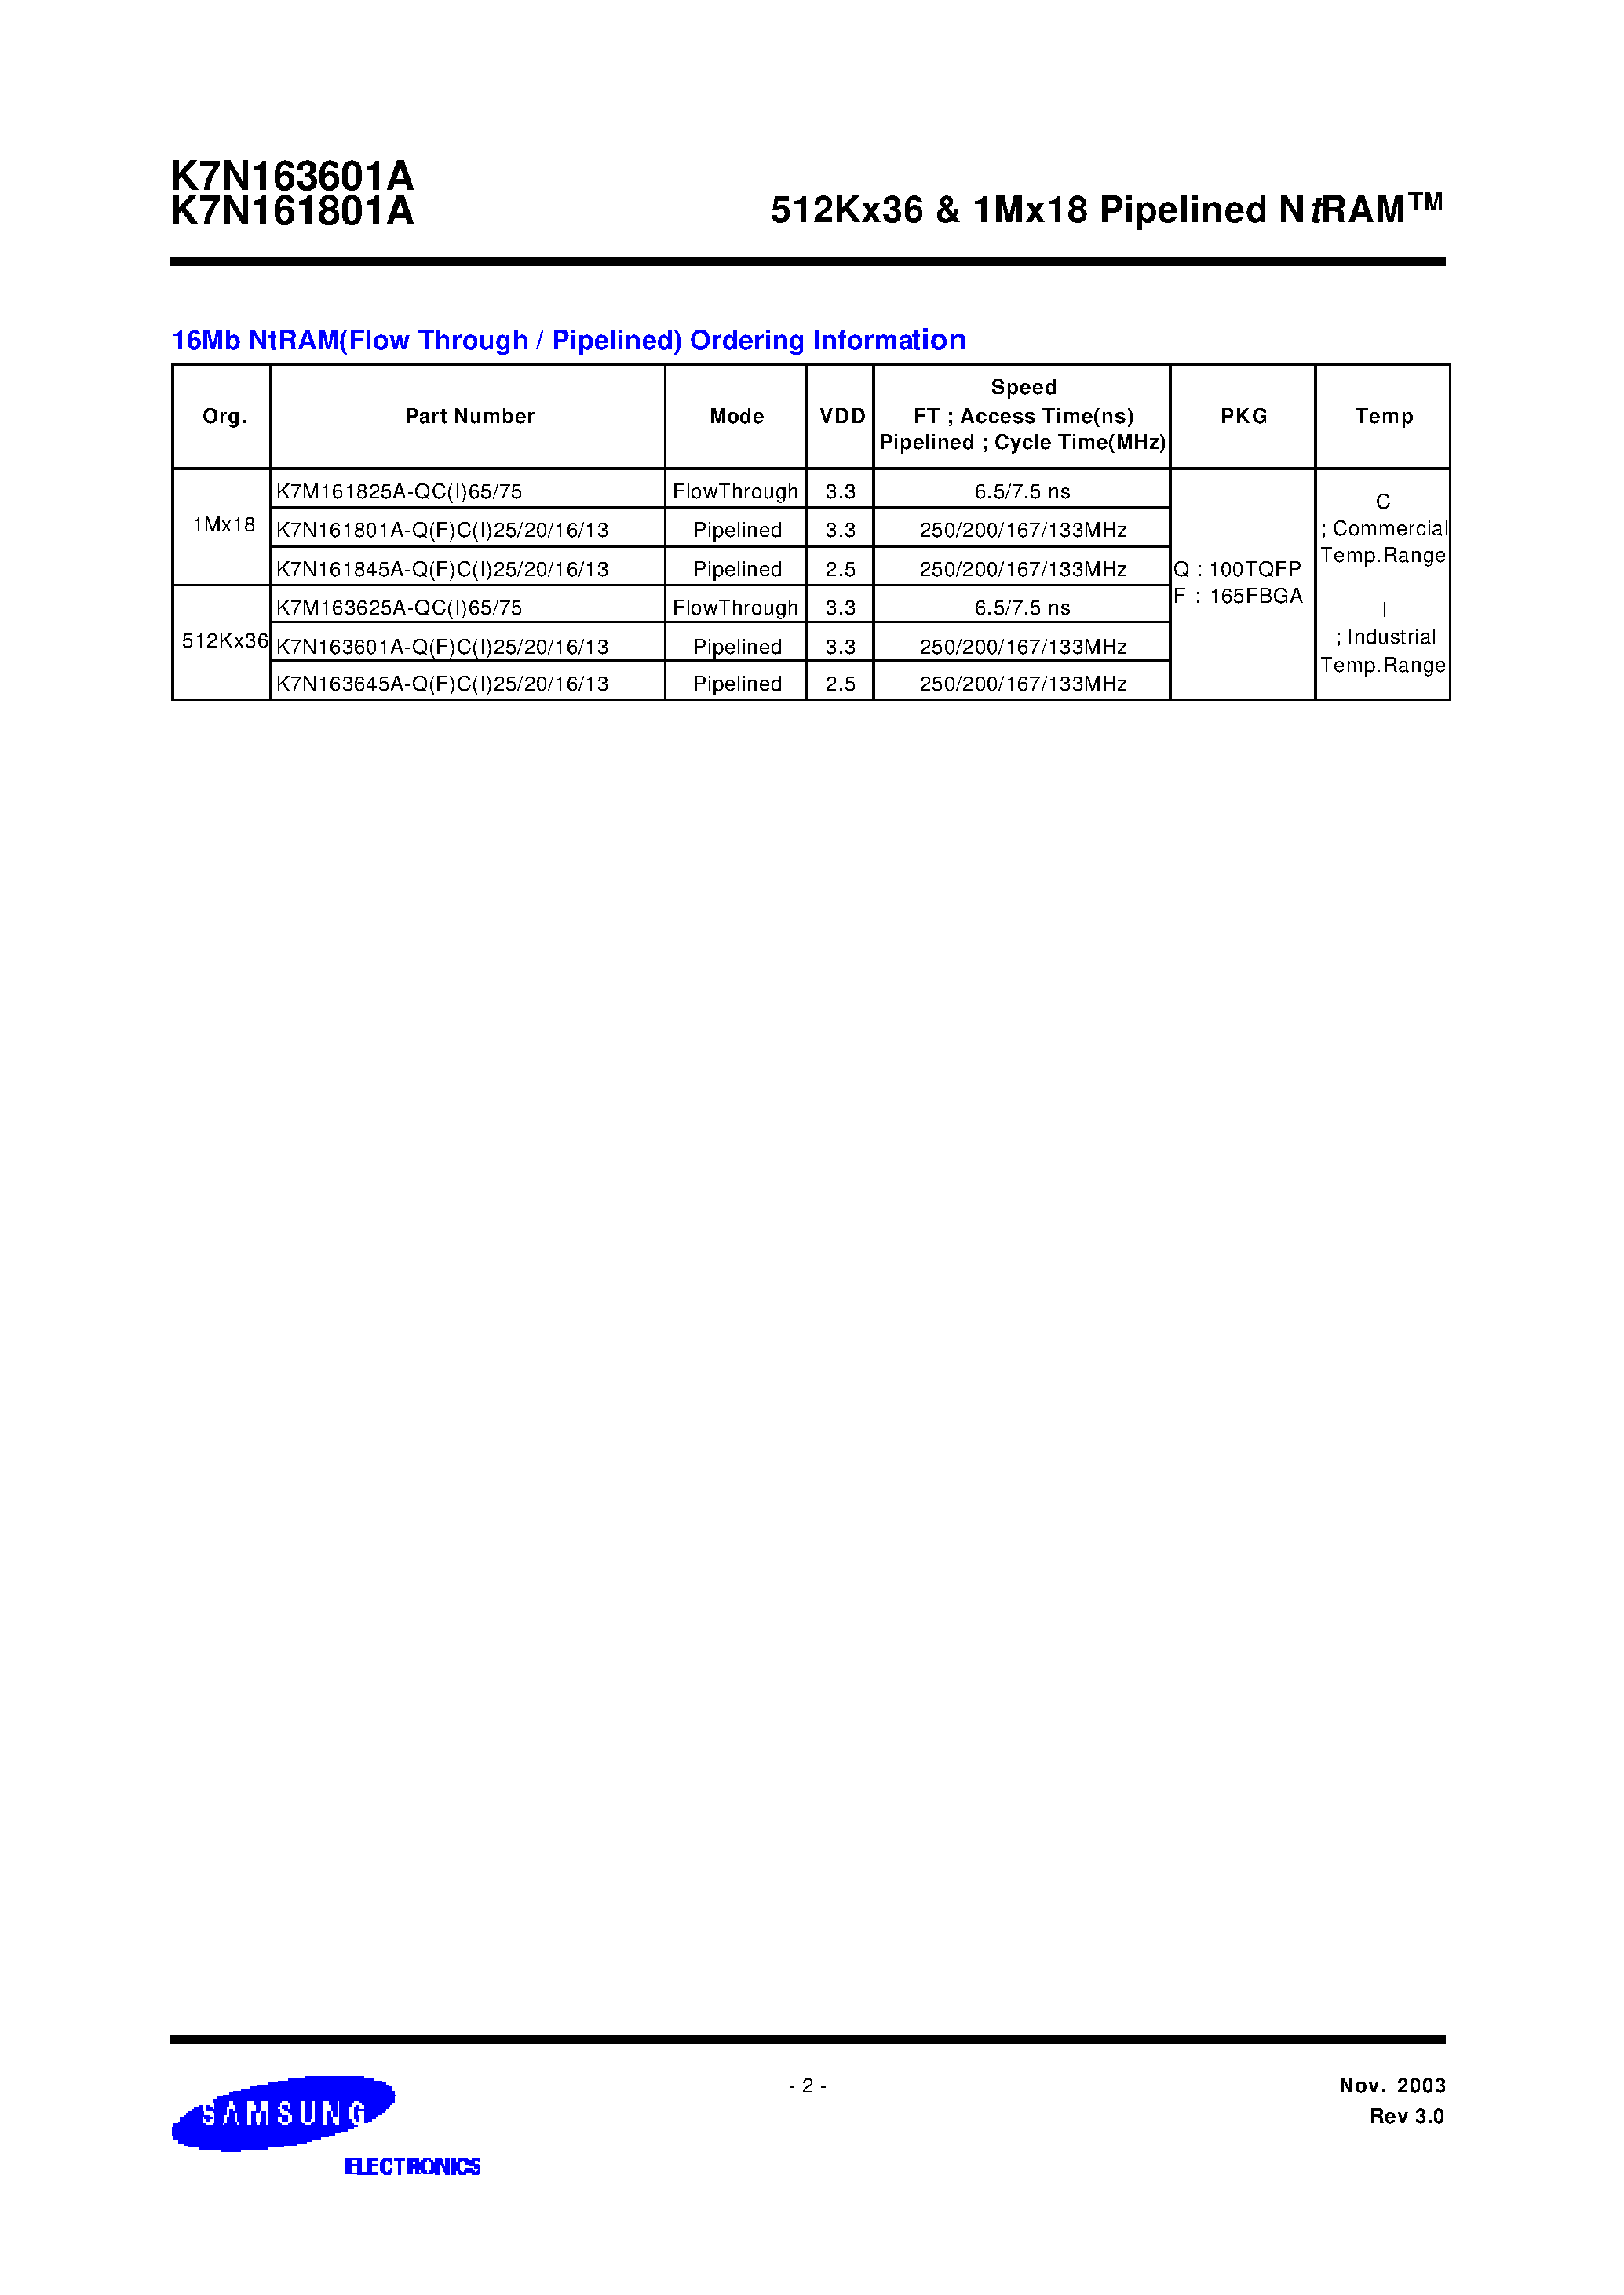 Datasheet K7N161845A-Q(F)C(I)13 - 512Kx36 & 1Mx18 Pipelined NtRAM page 2